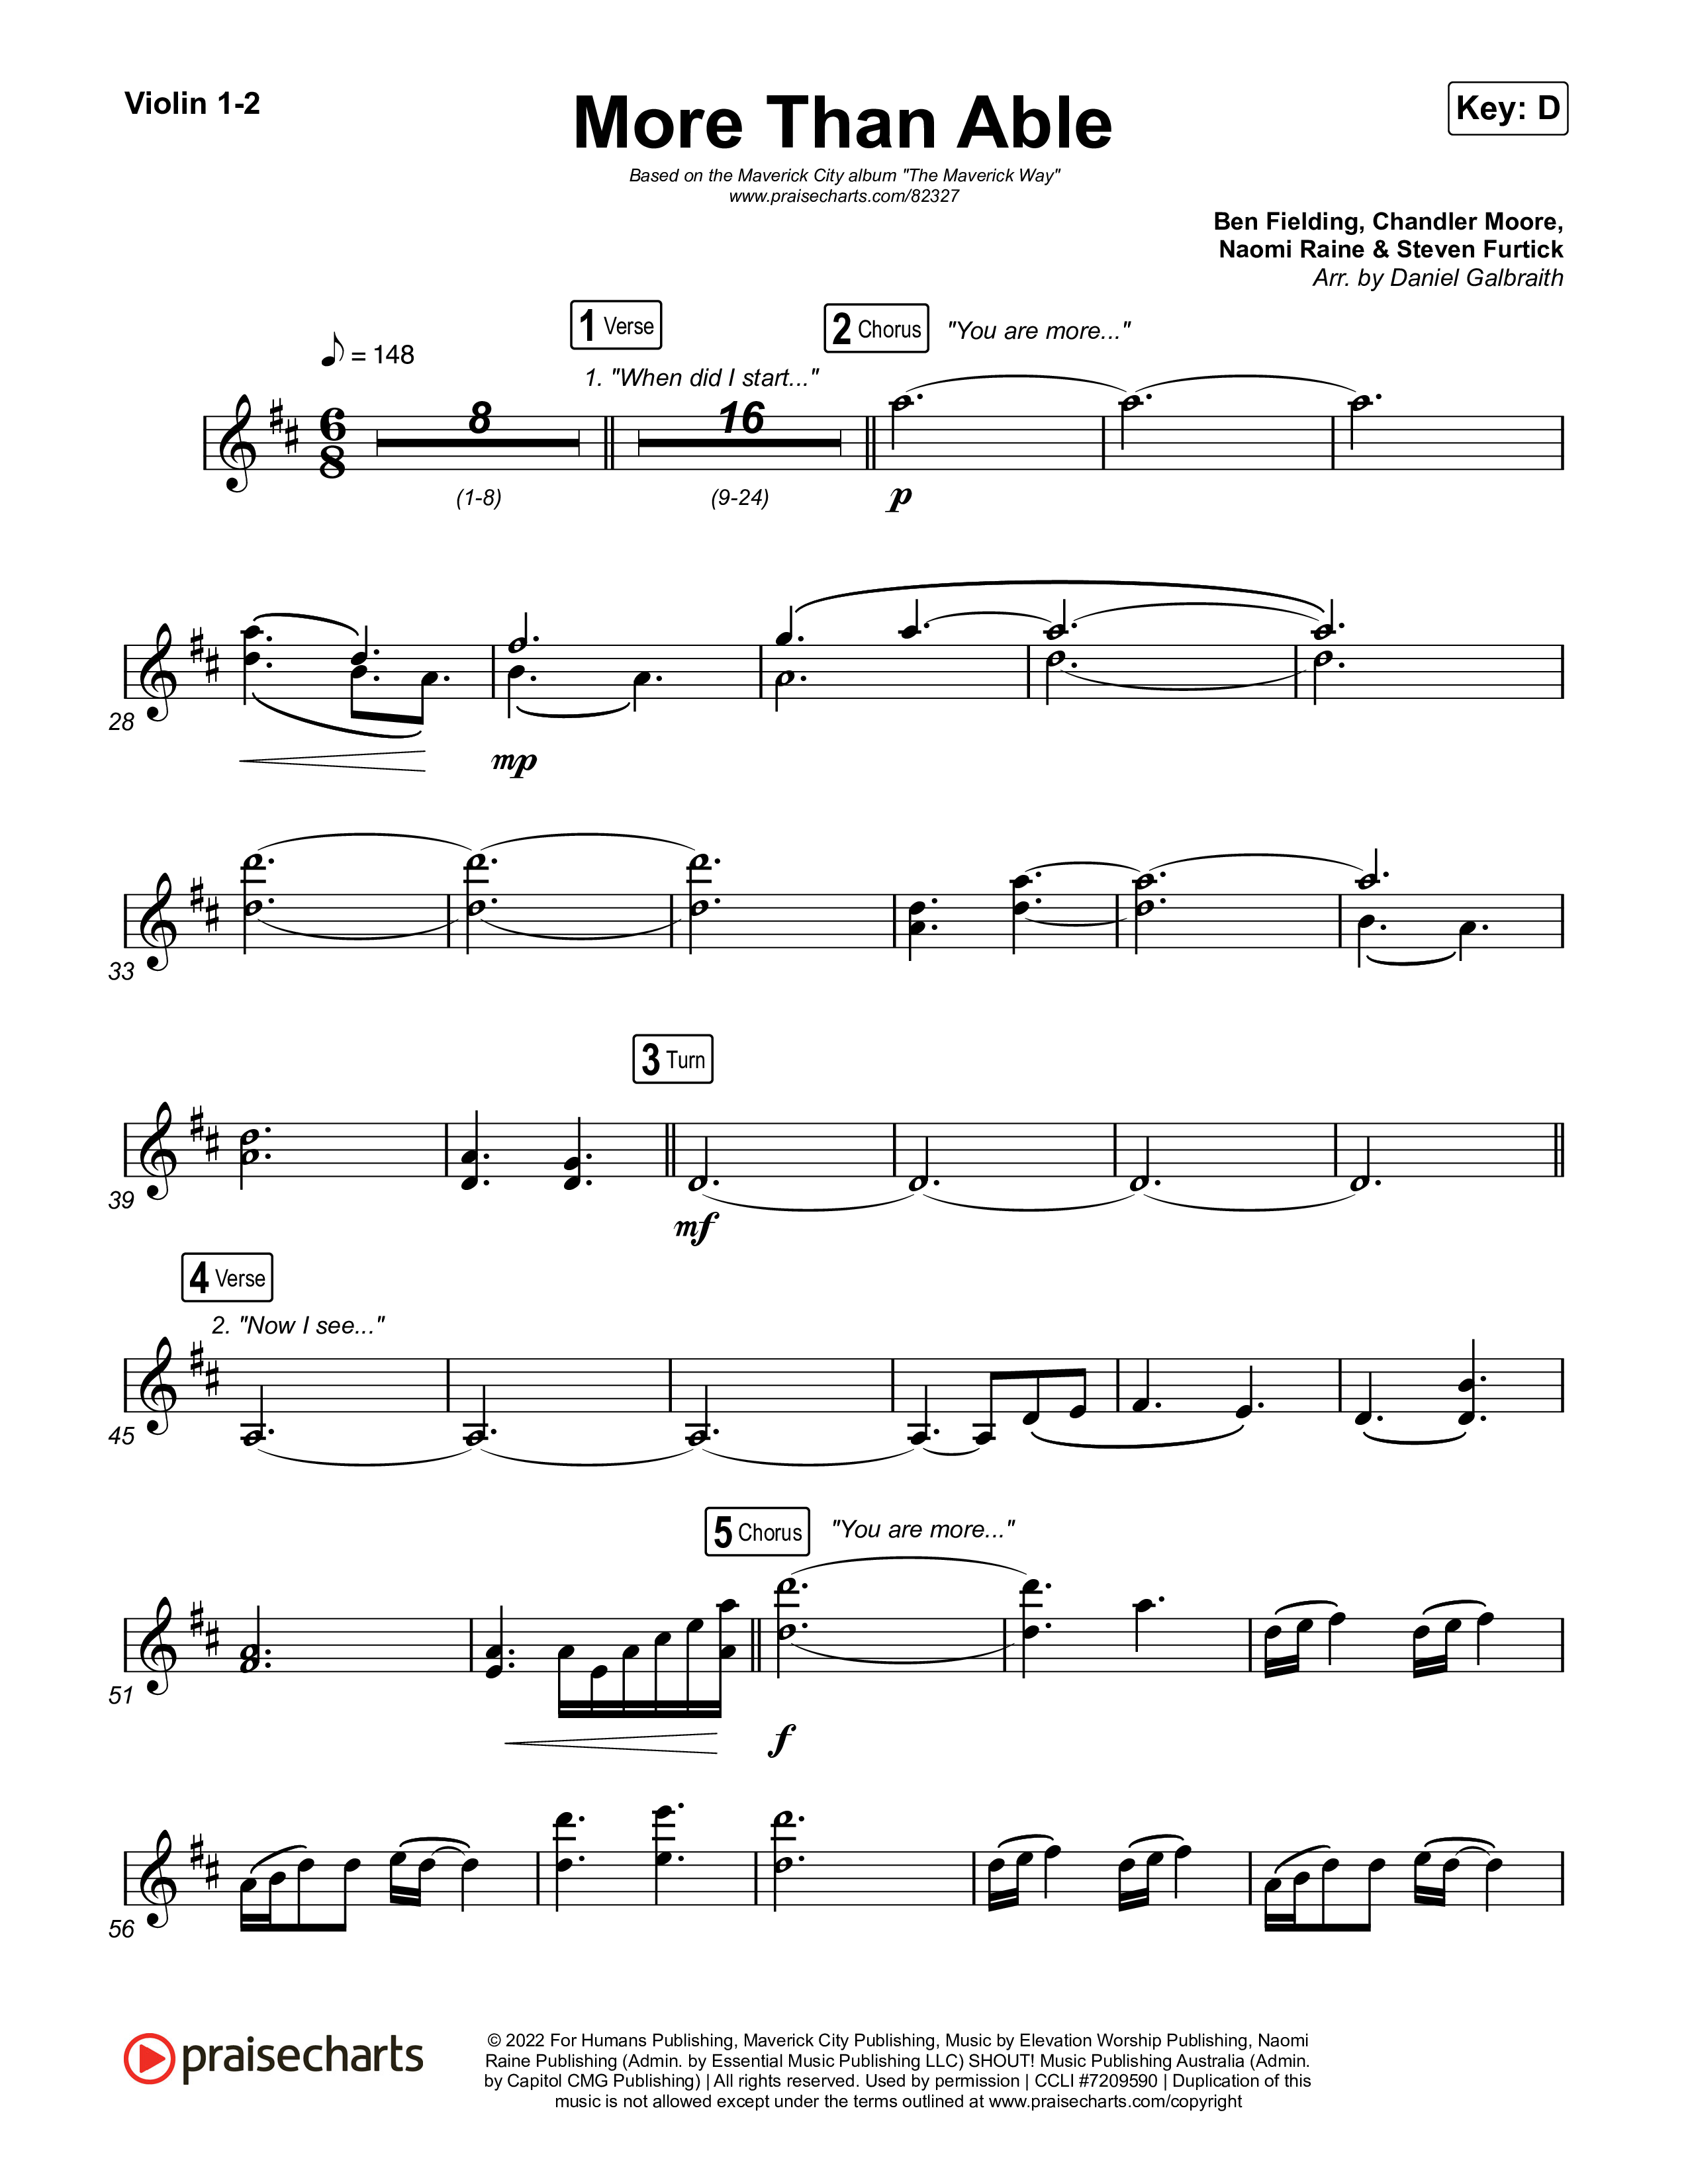 More Than Able Violin 1,2 (Maverick City Music / Tasha Cobbs Leonard)